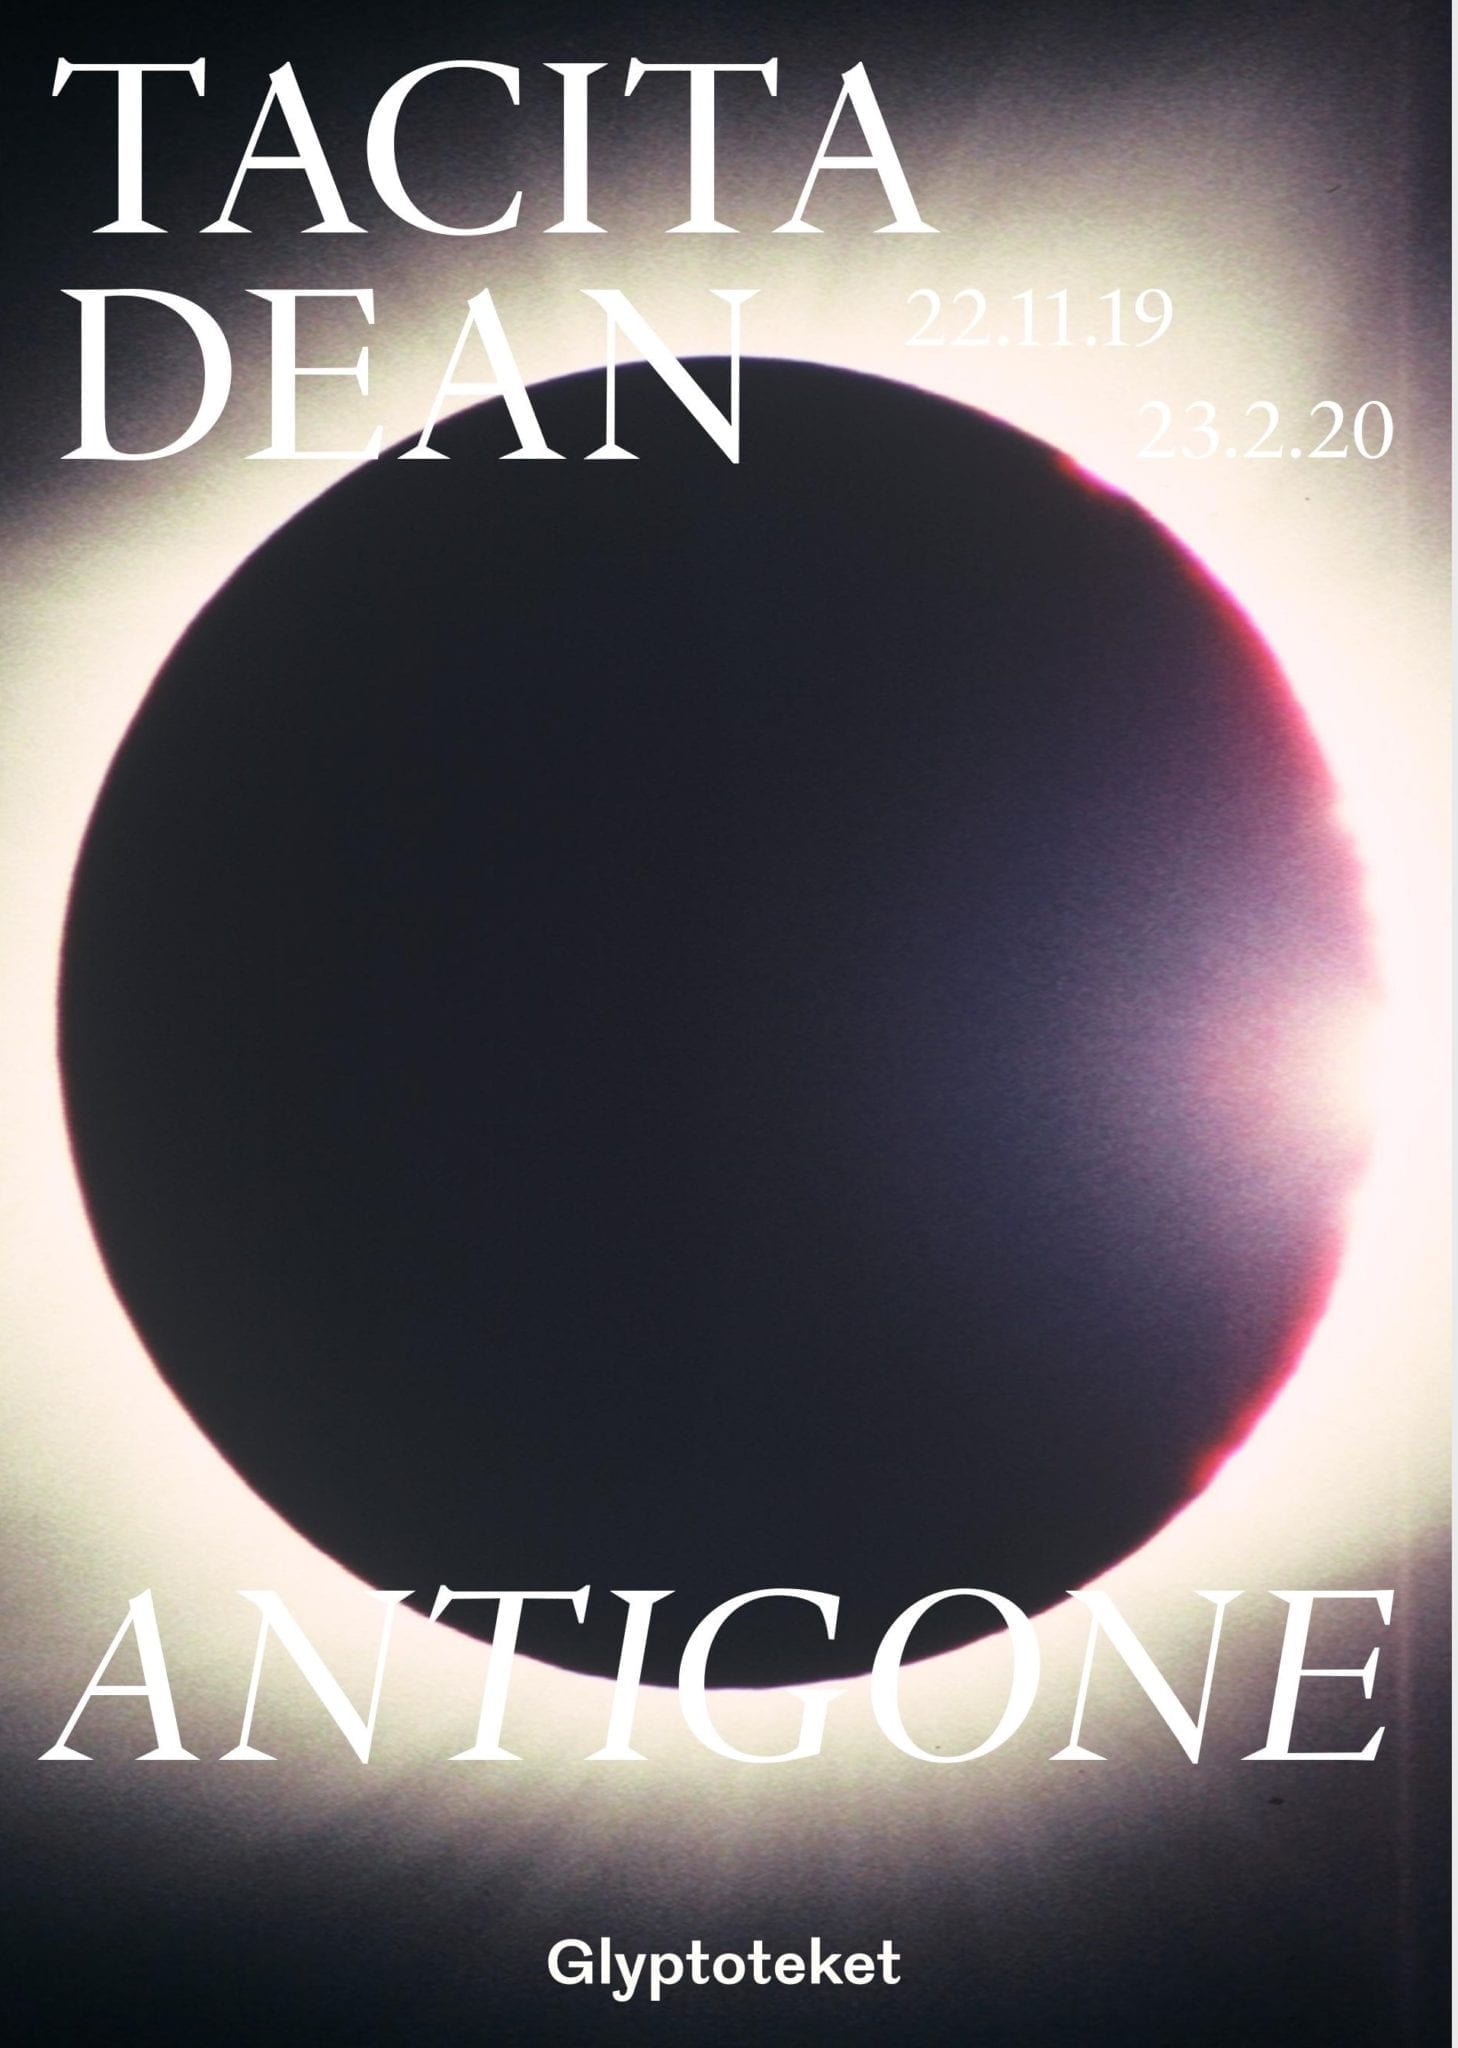 Tacita Dean - Antigone plakatimage